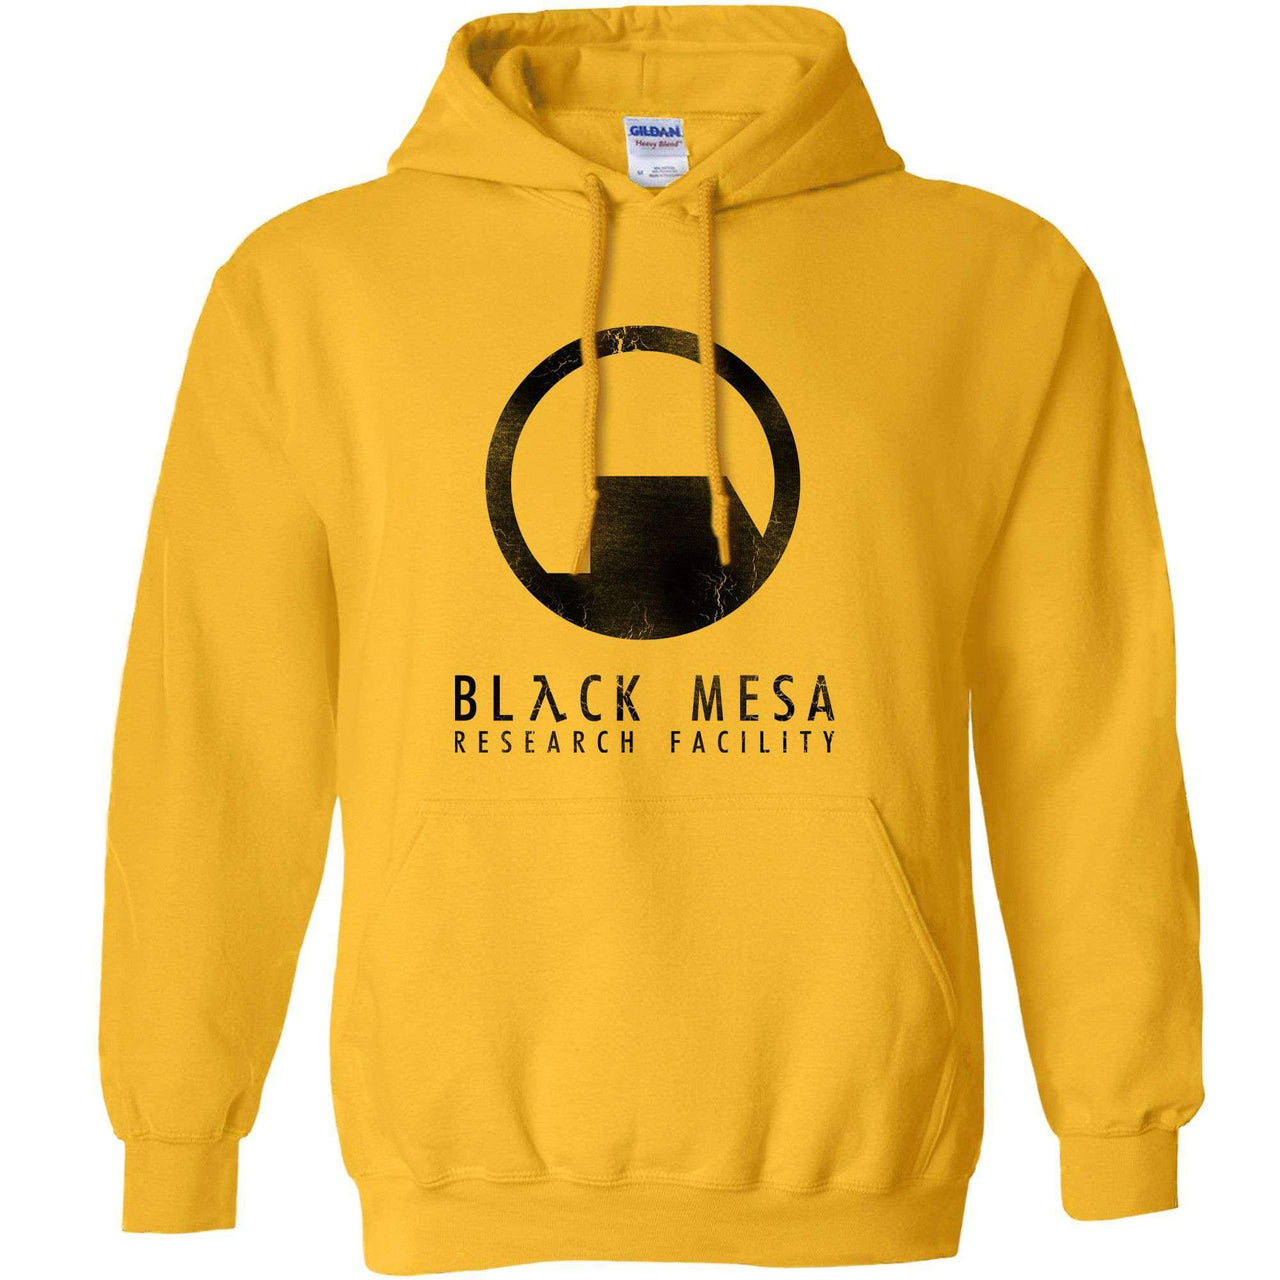 Black Mesa Hoodie For Men and Women 8Ball